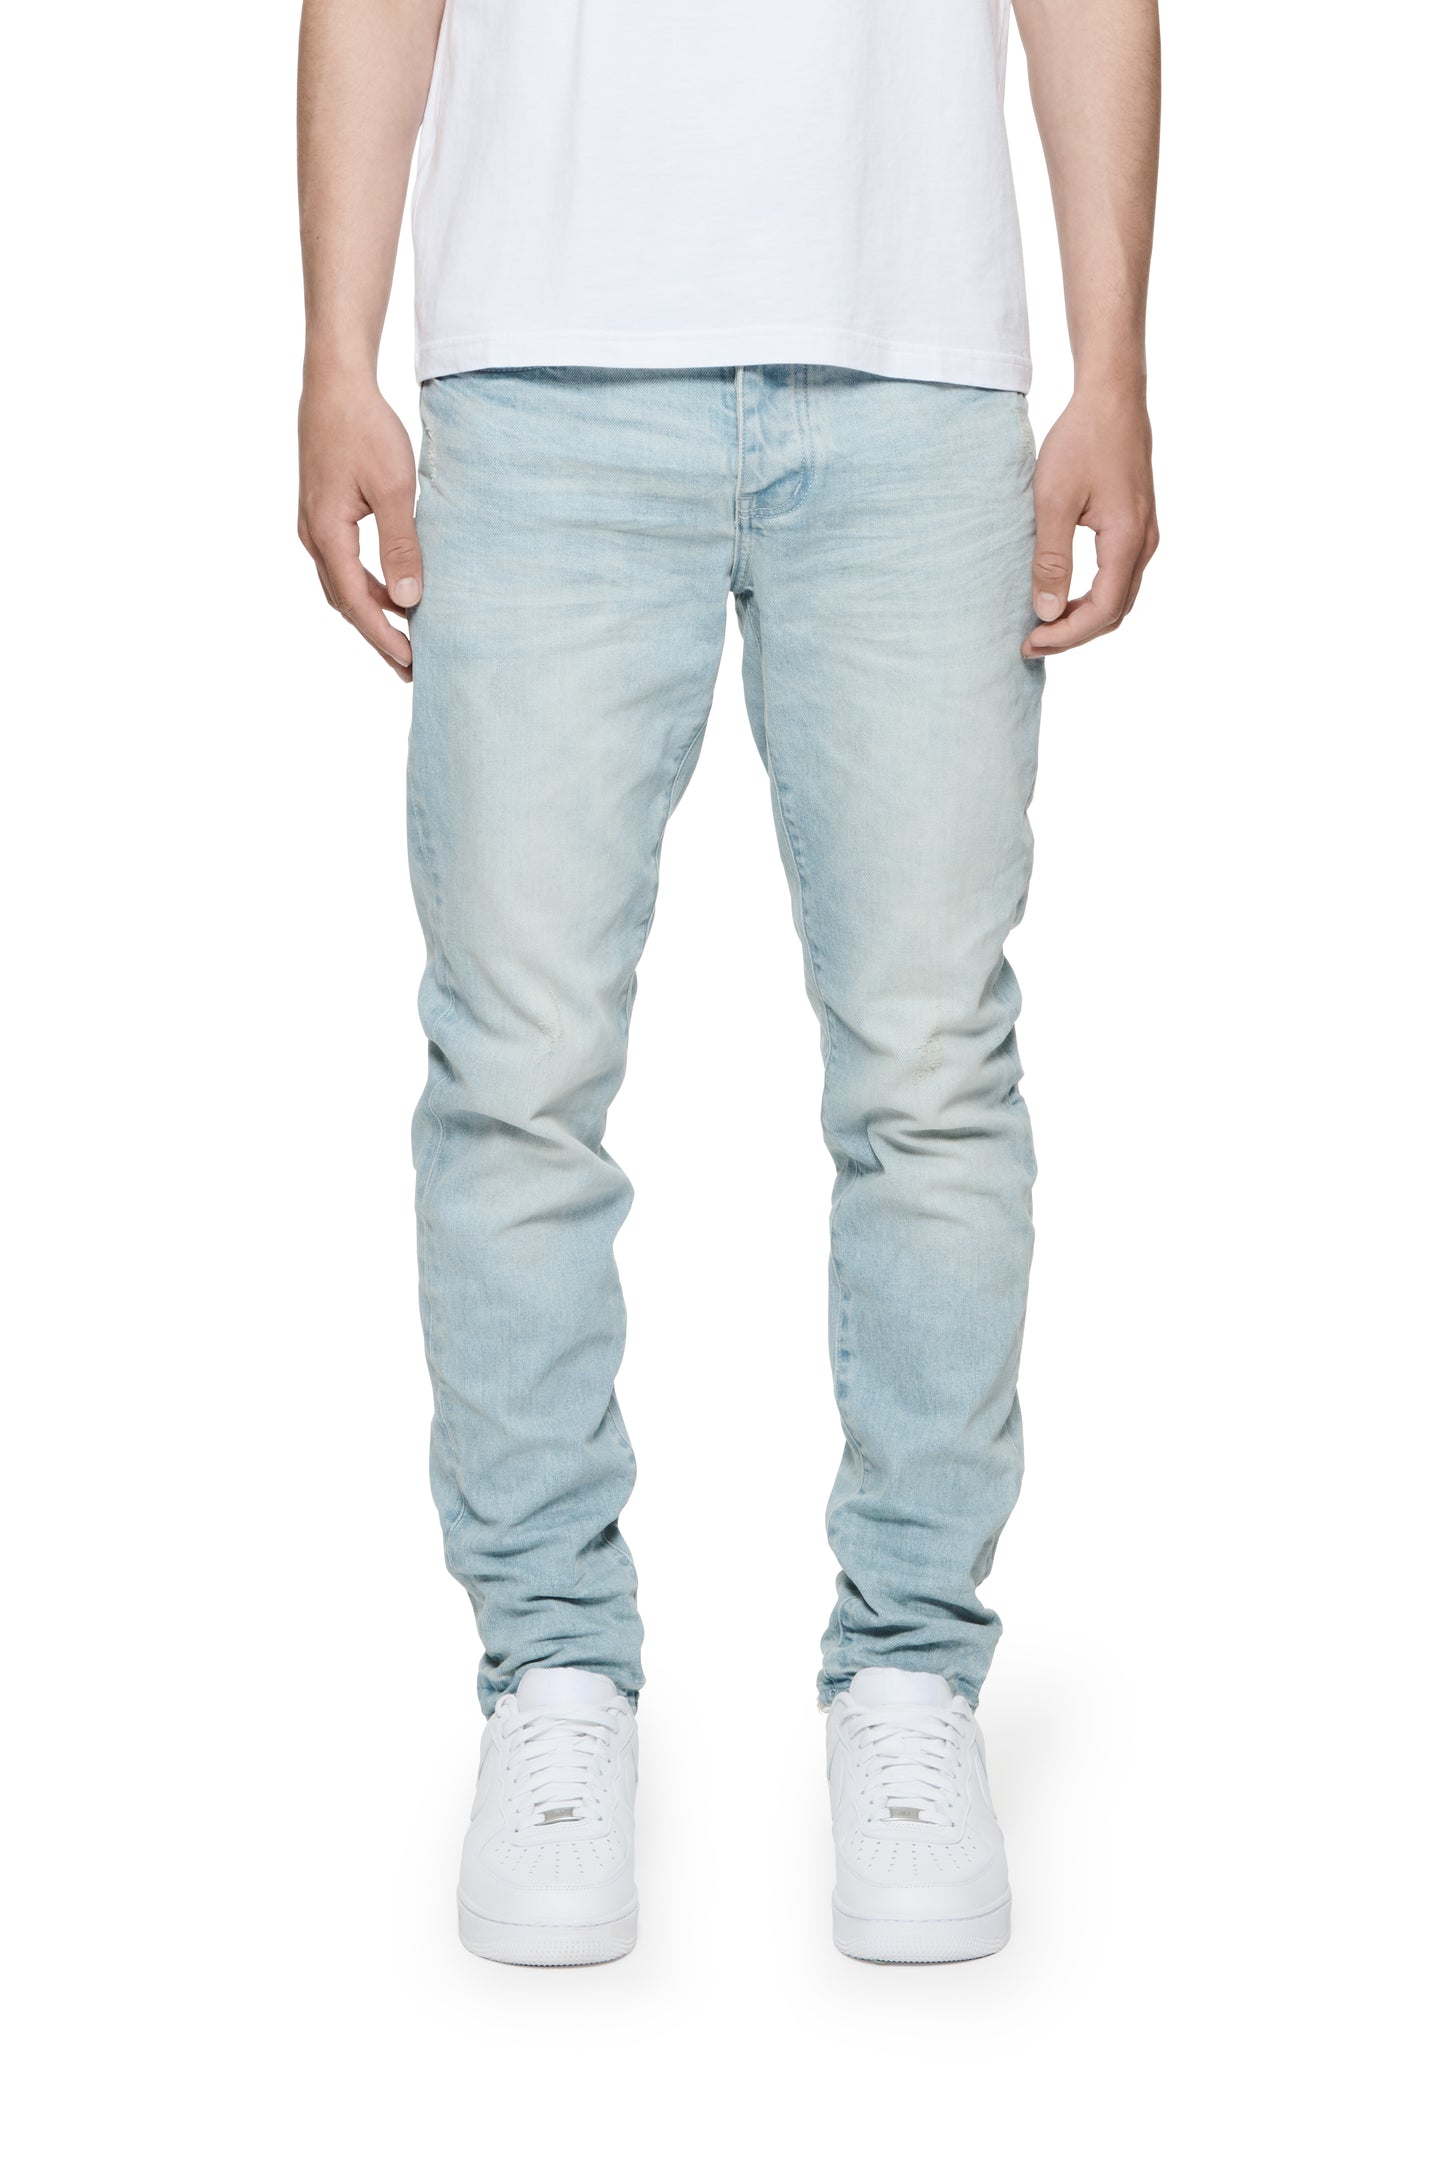 PURPLE BRAND P001 Stretch Skinny Low-Rise Jeans